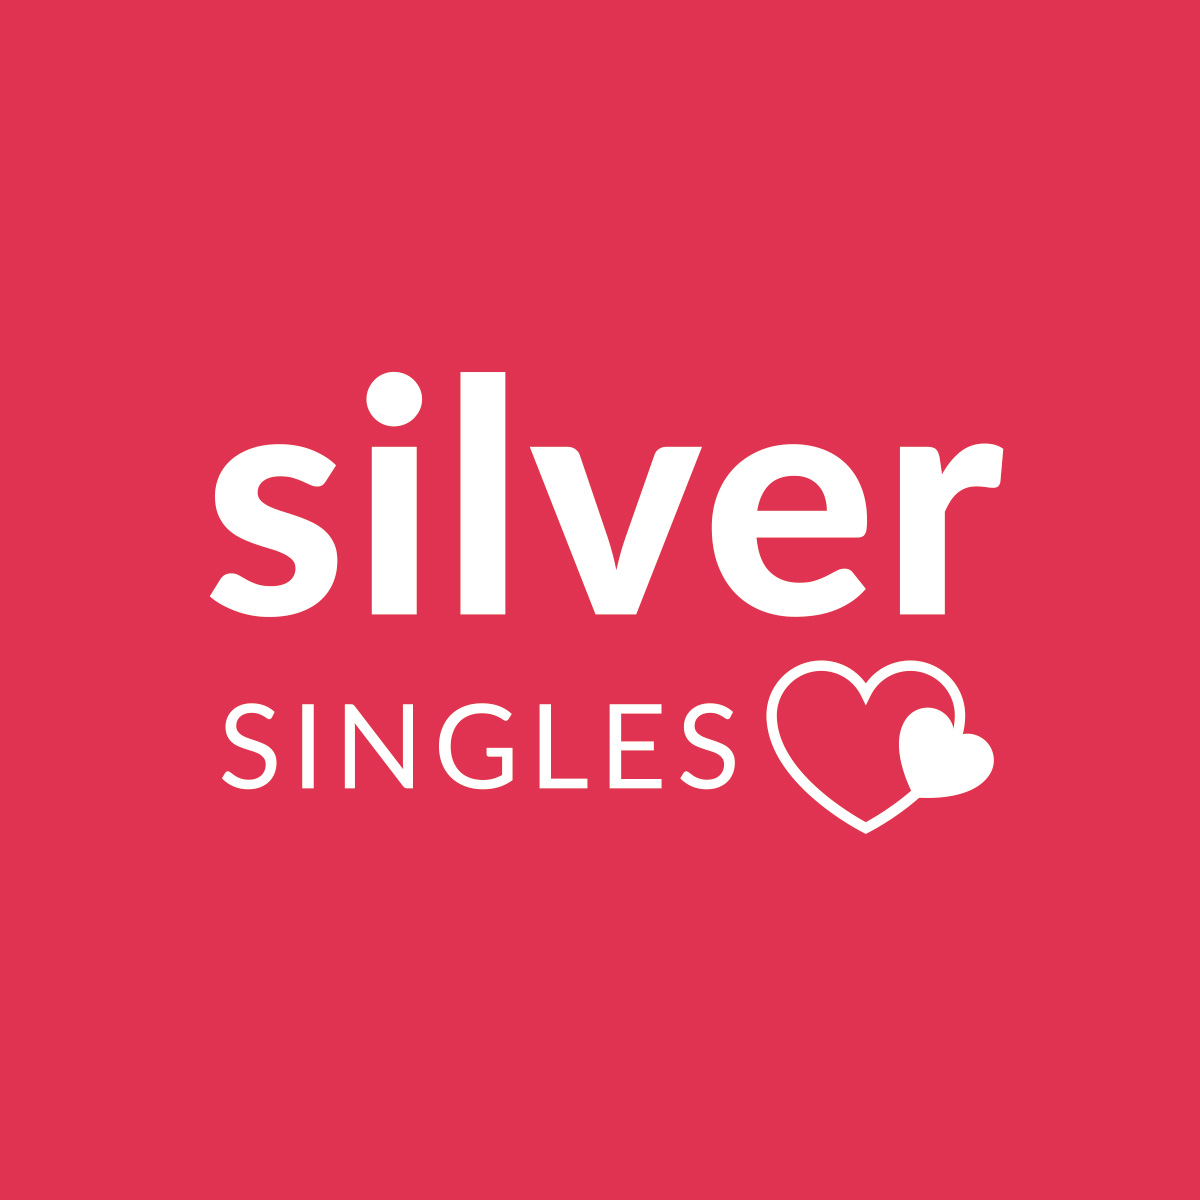 silversingles logo